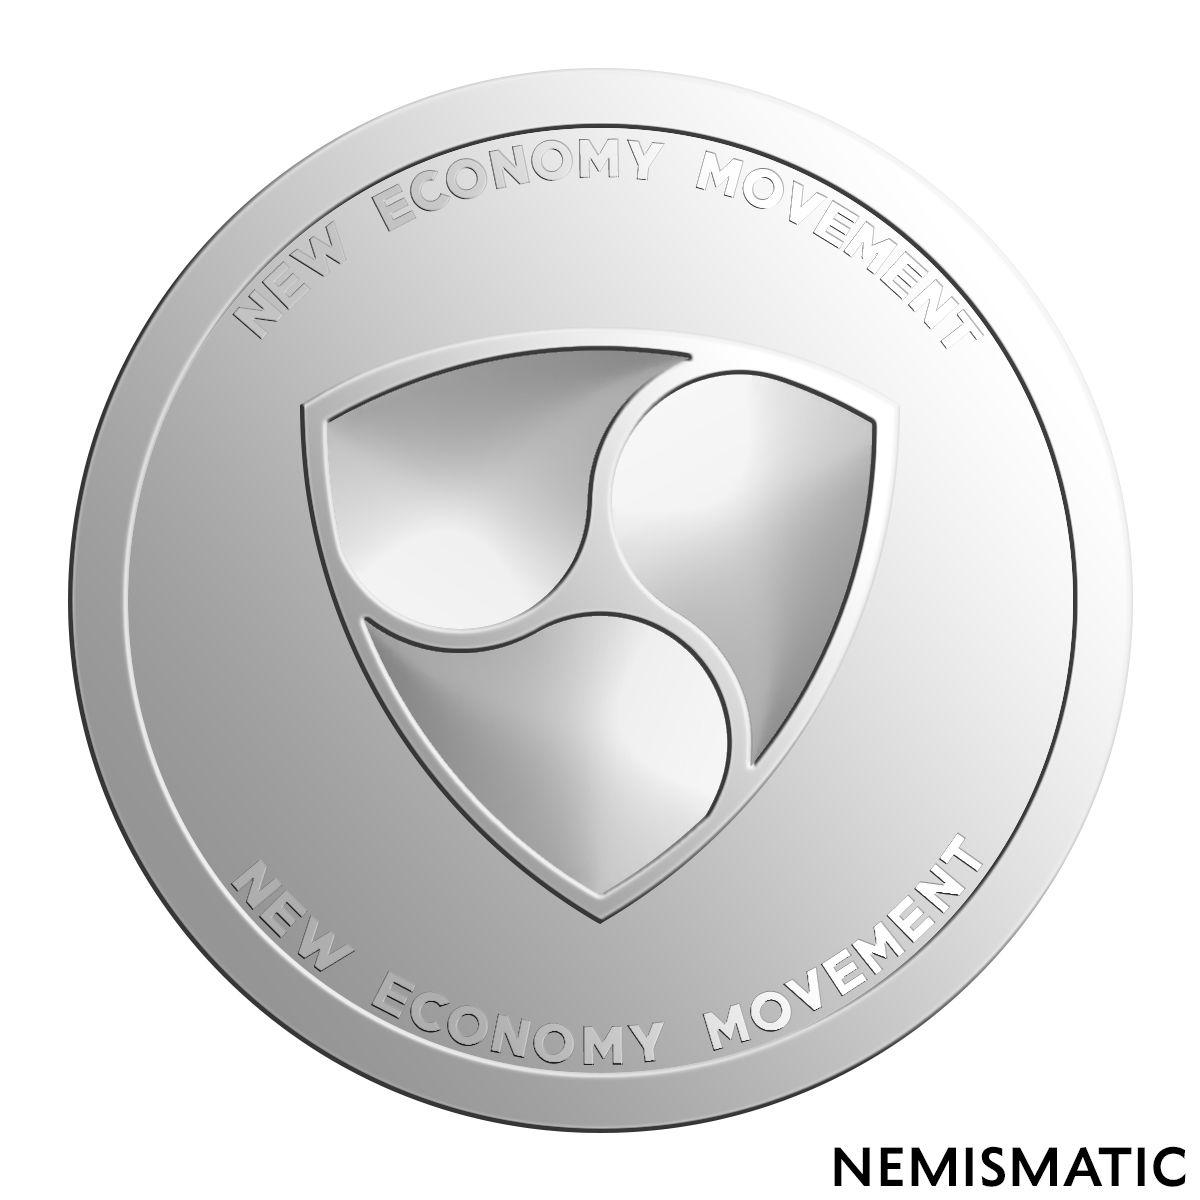 Silver Circle Logo - NEM colorful logo. What do you think?